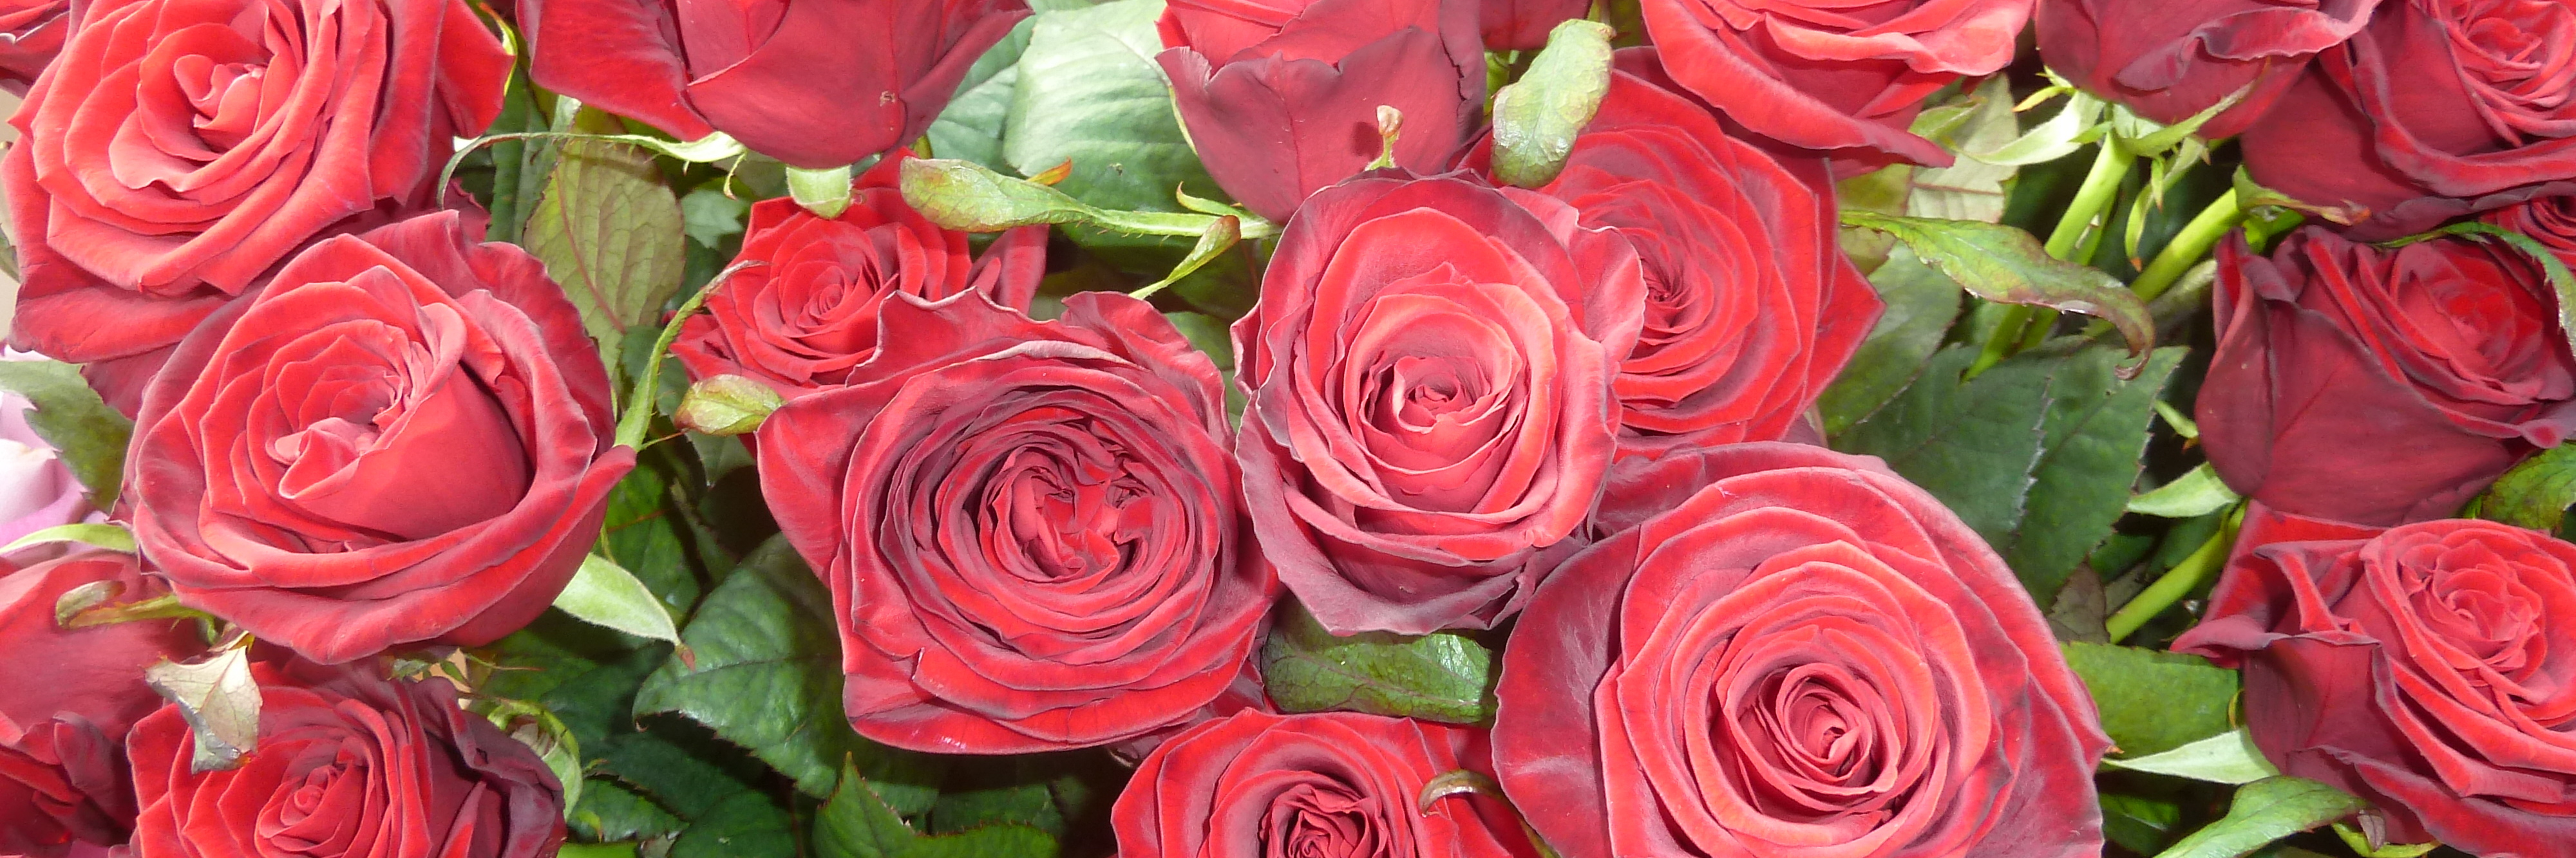 Rote Rosen in verschiedenen Preisklassen